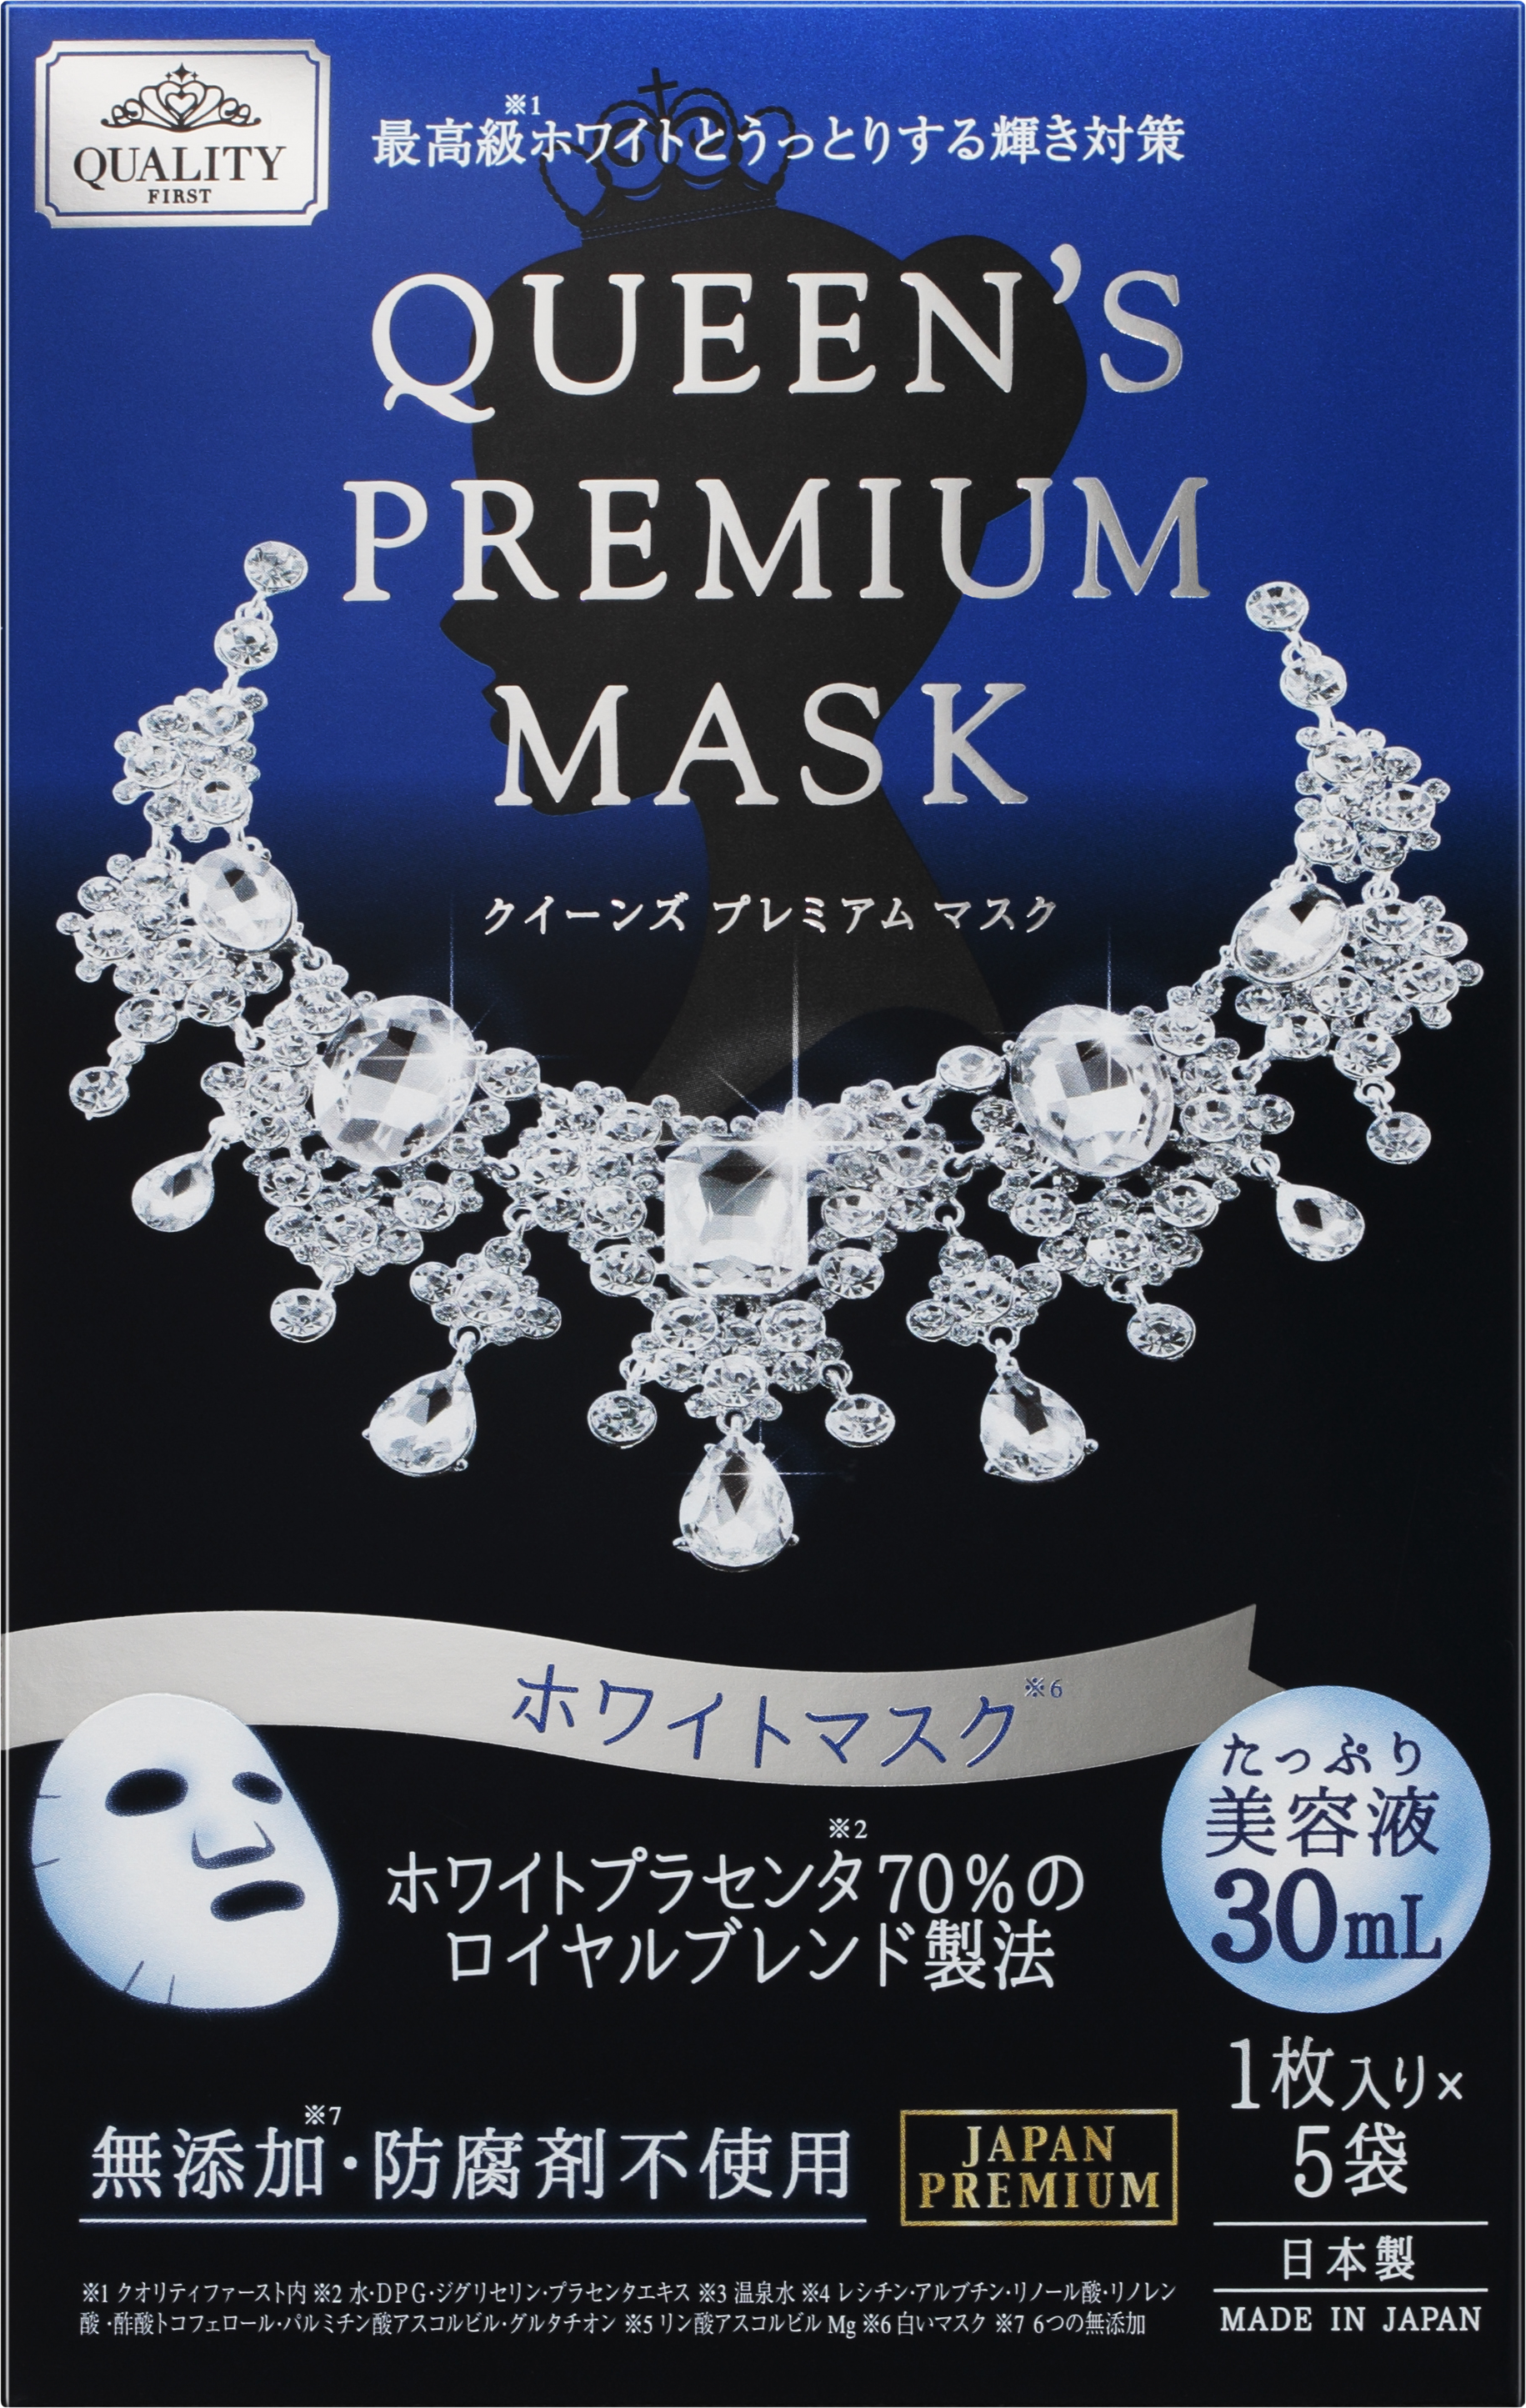 Quality 1st Queen’s Premium Mask Выравнивающая цвет кожи лица плацентарная маска «Королева Вайт",5шт